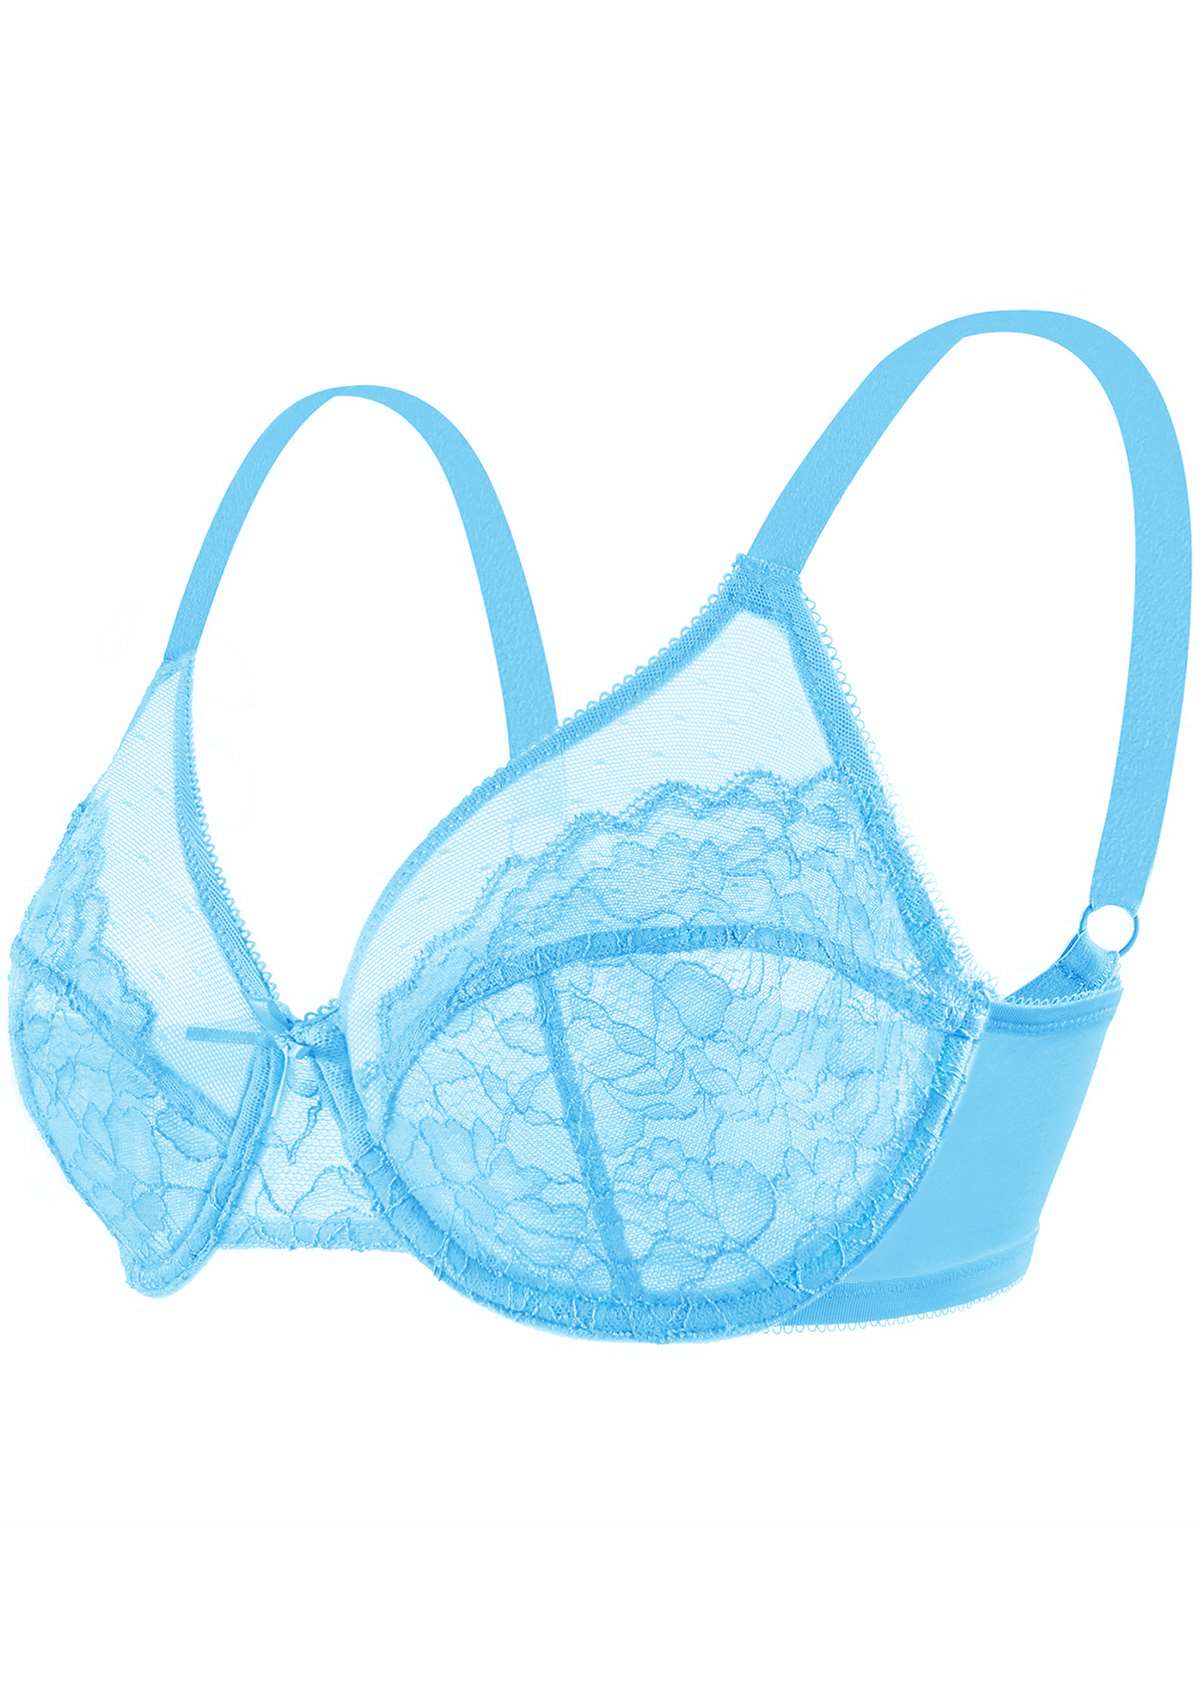 HSIA Enchante Minimizer Lace Bra: Full Support For Heavy Breasts - Capri Blue / 40 / C